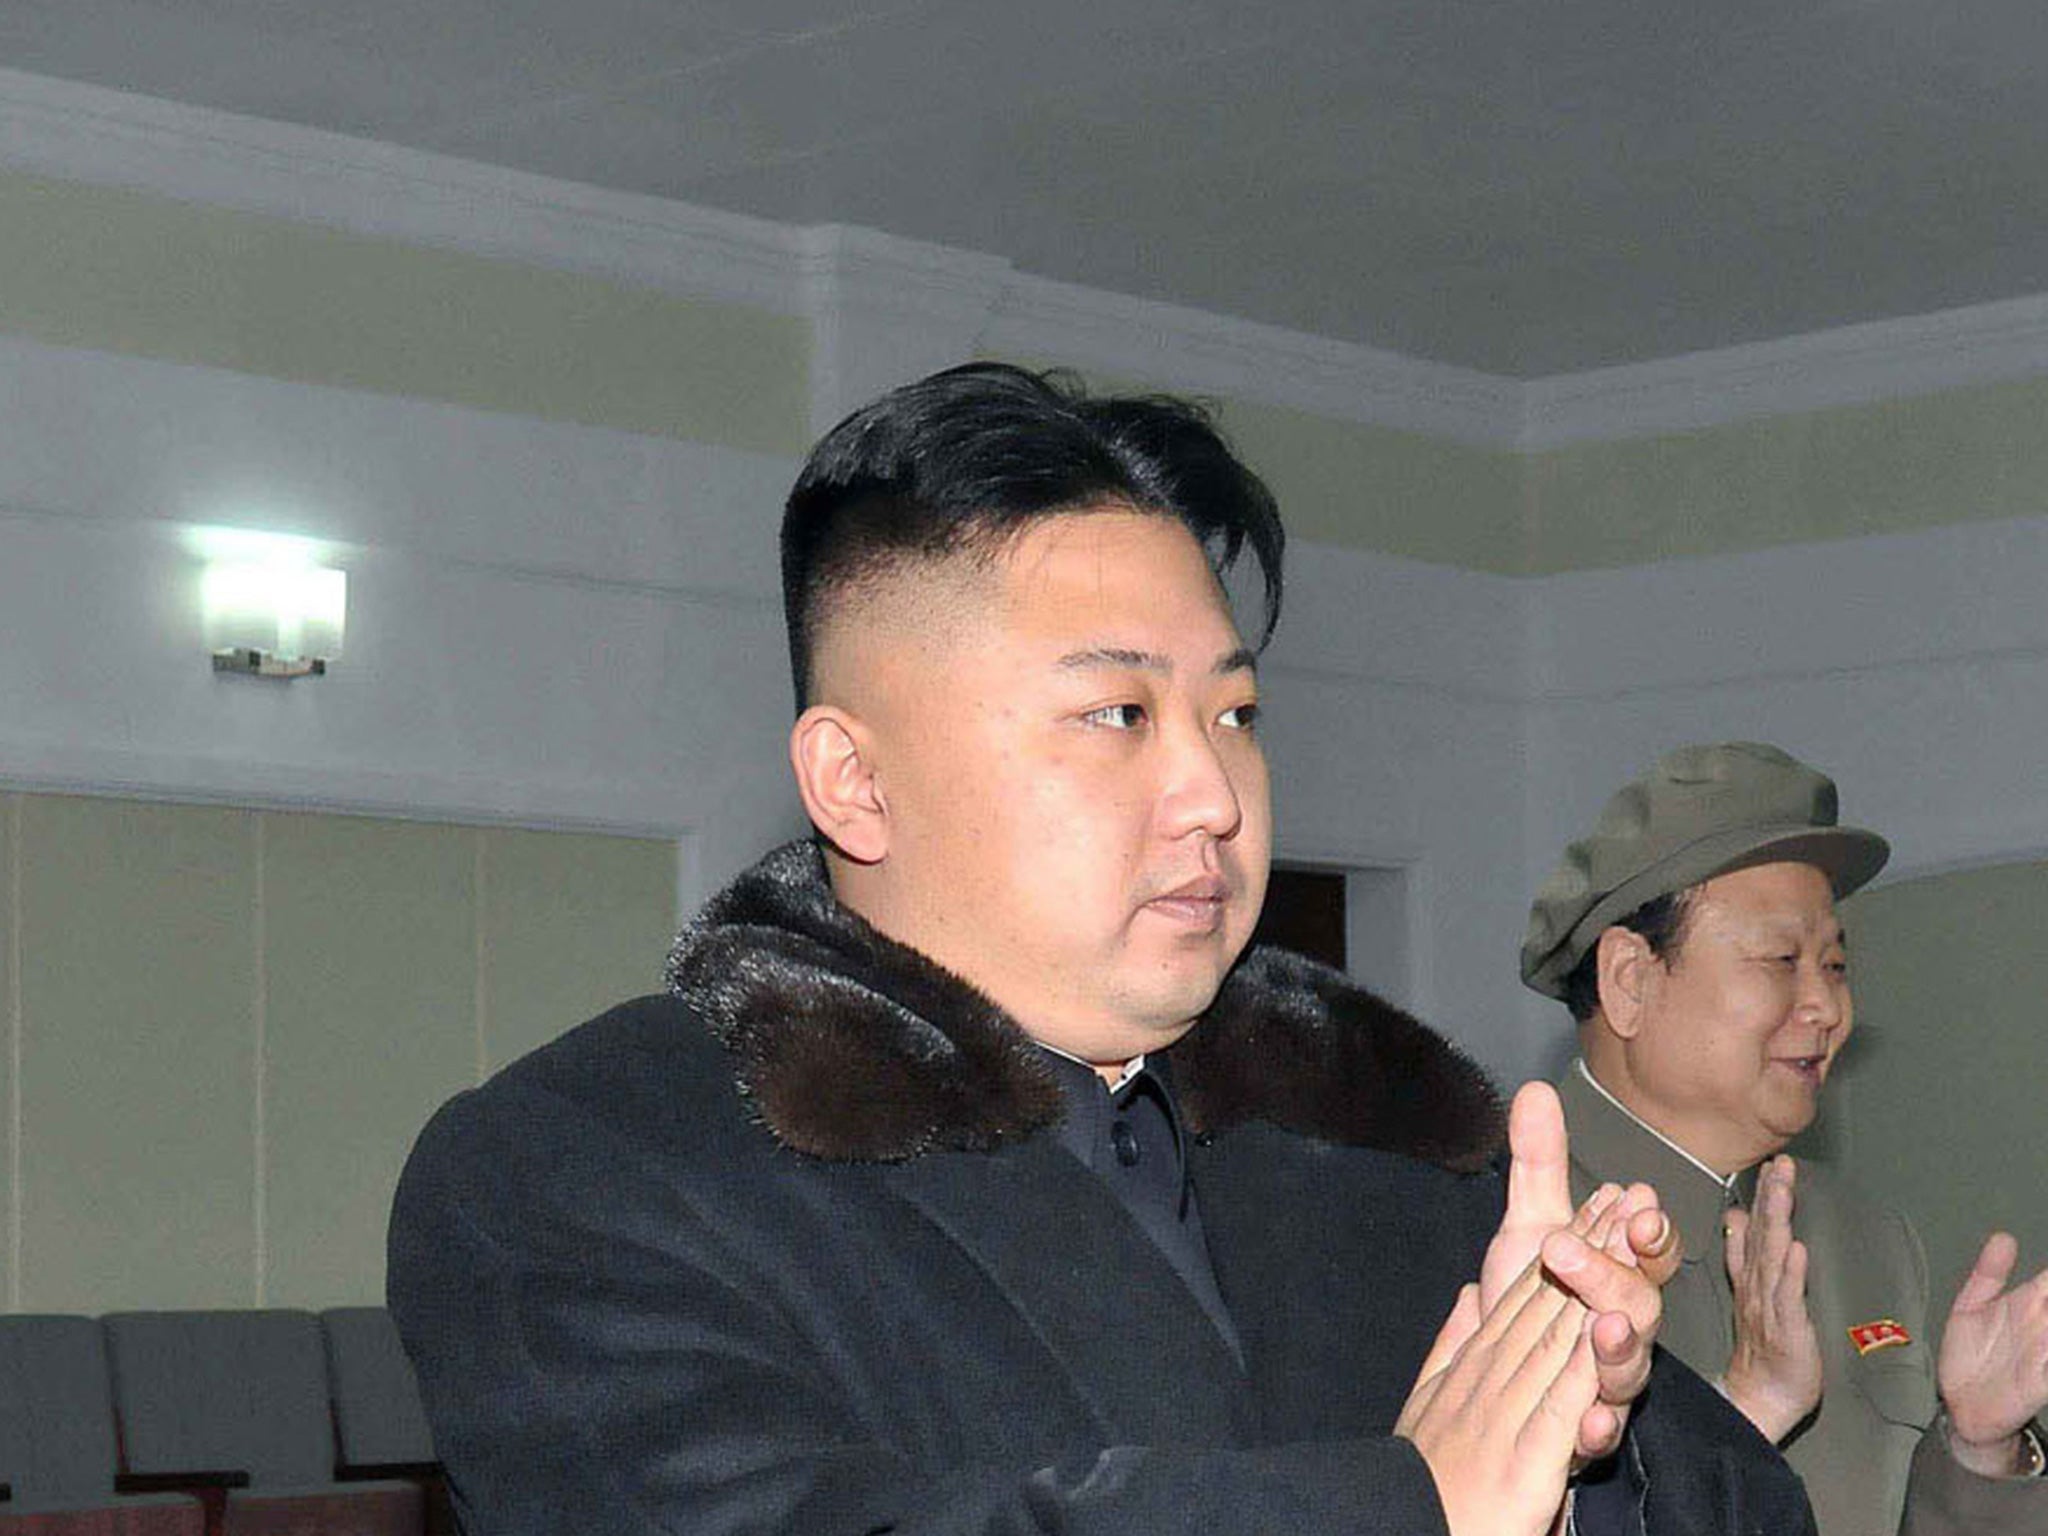 Kim Jong Un's distinctive hair cut